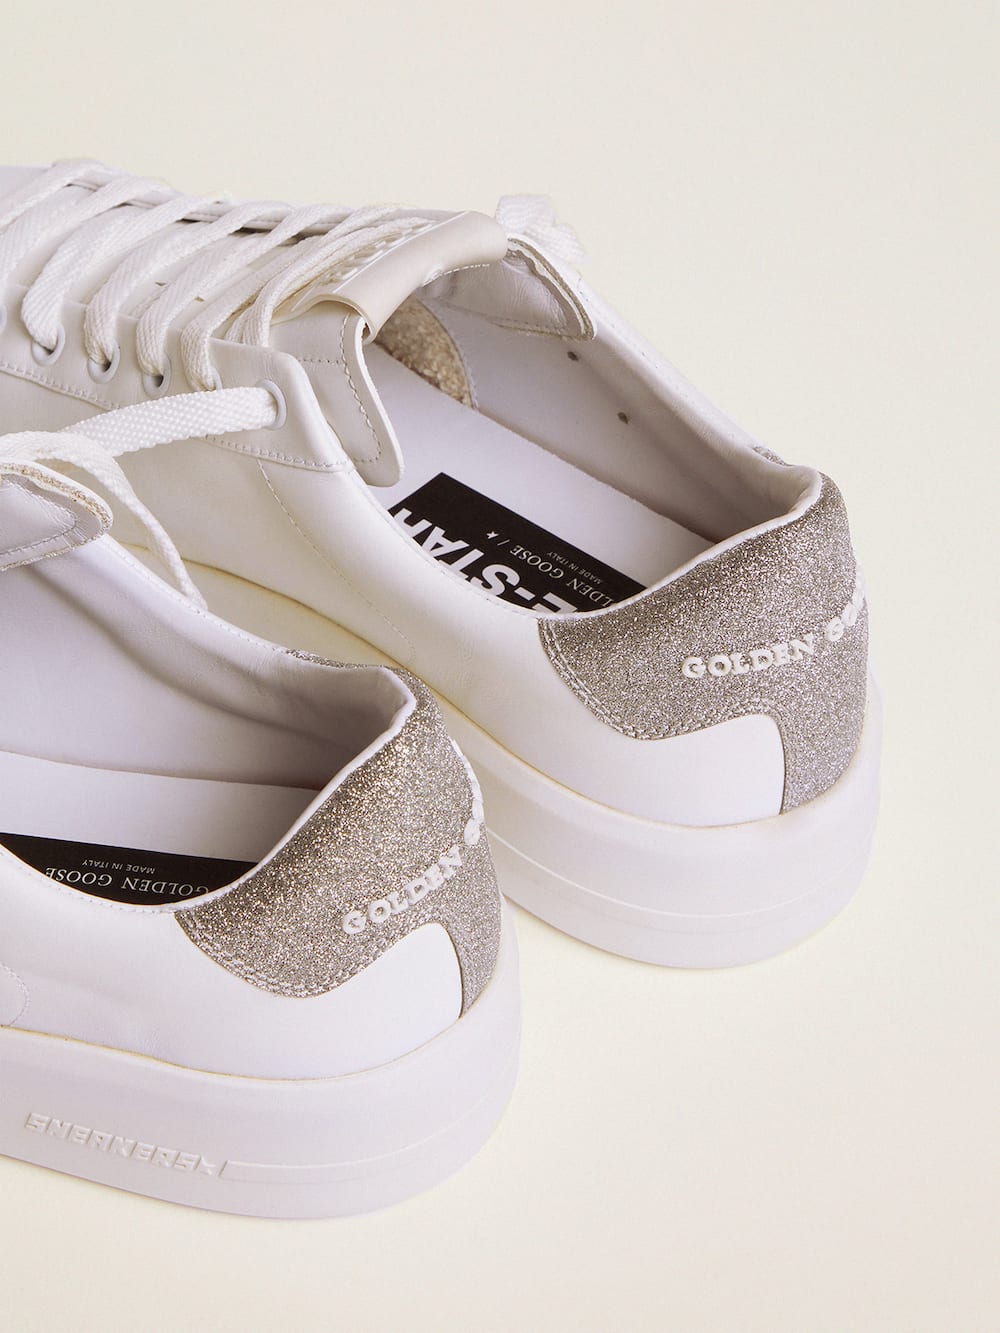 Golden Goose - Women's Purestar sneakers with glittery silver heel tab in 